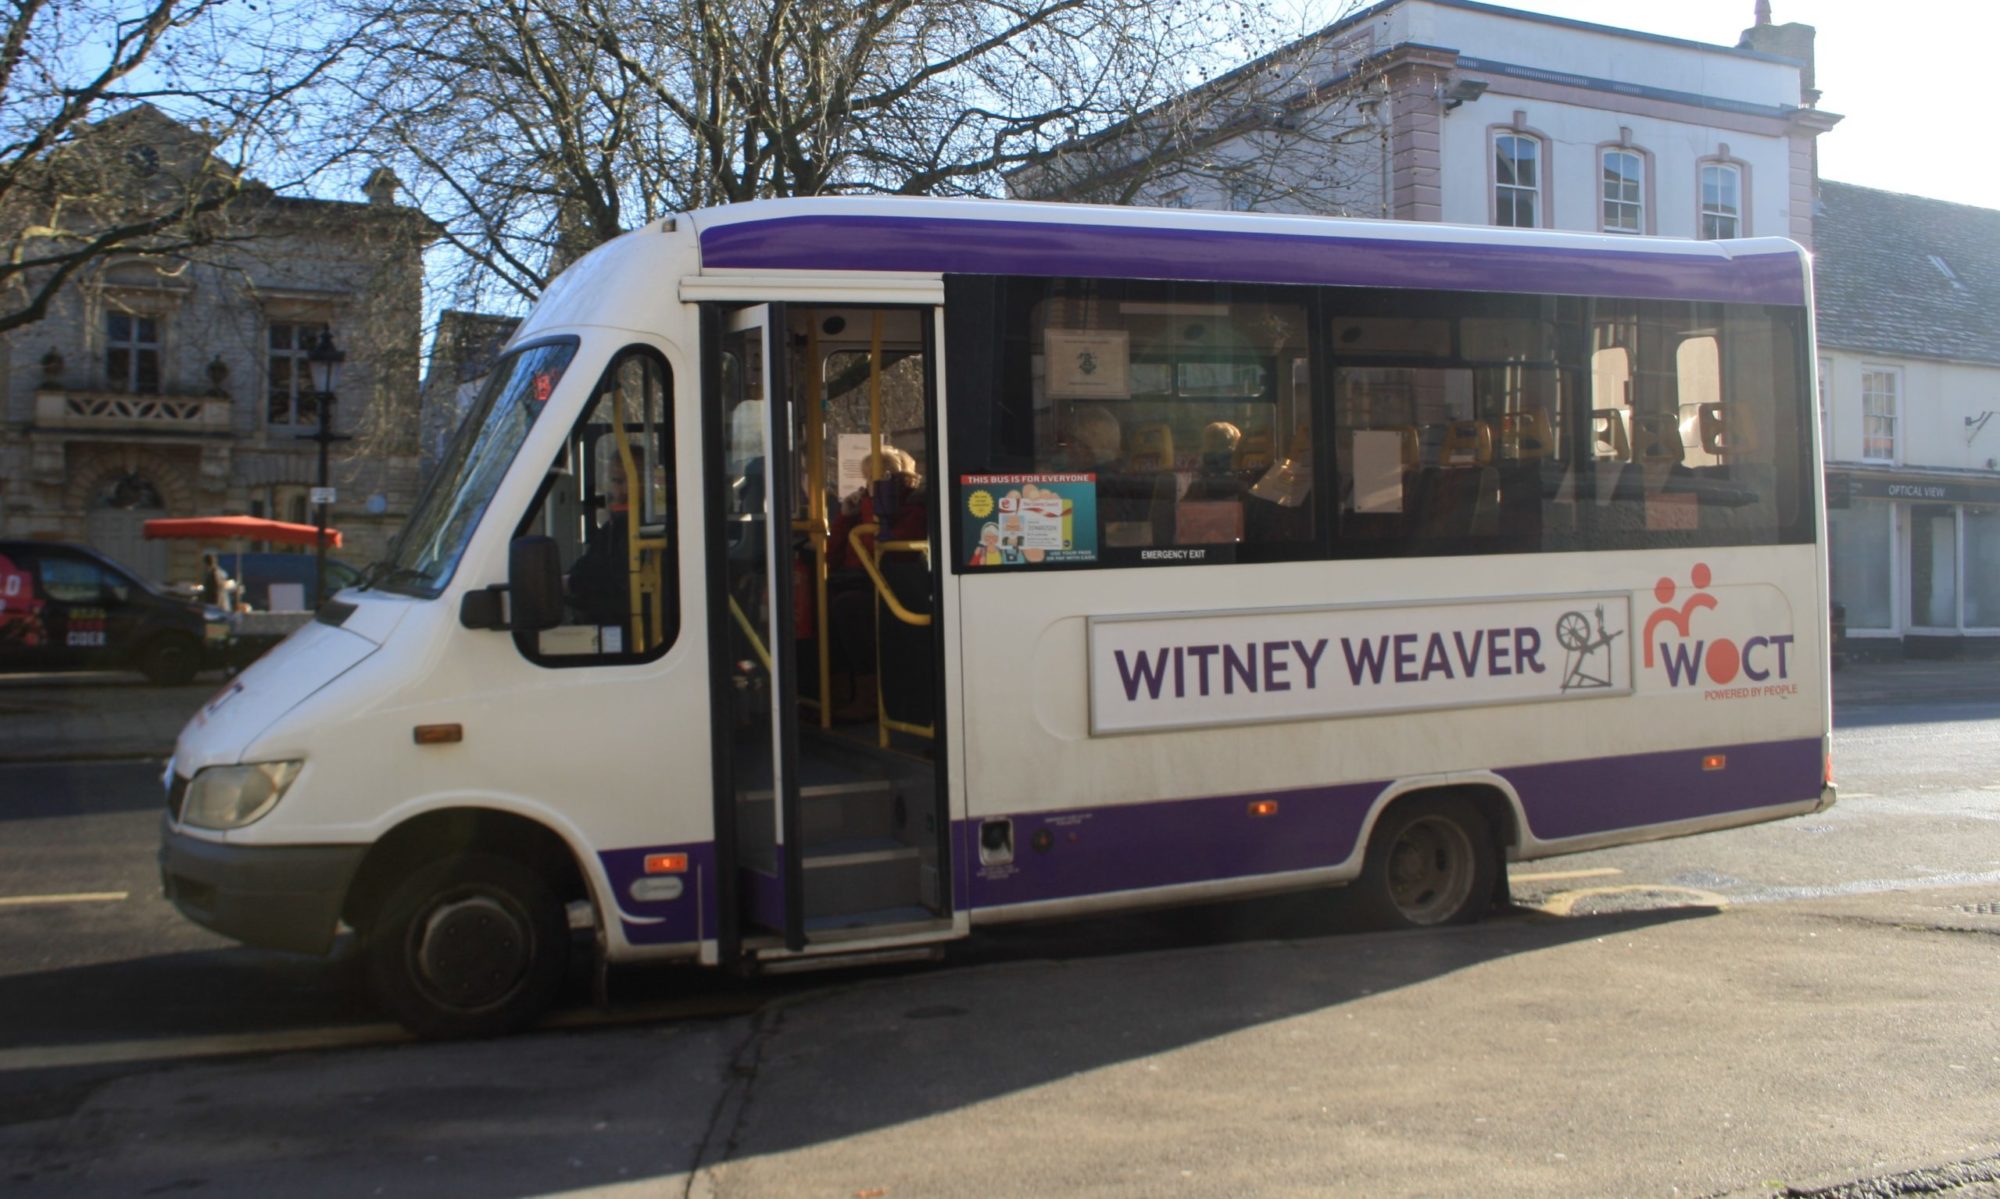 West Oxfordshire Community Transport